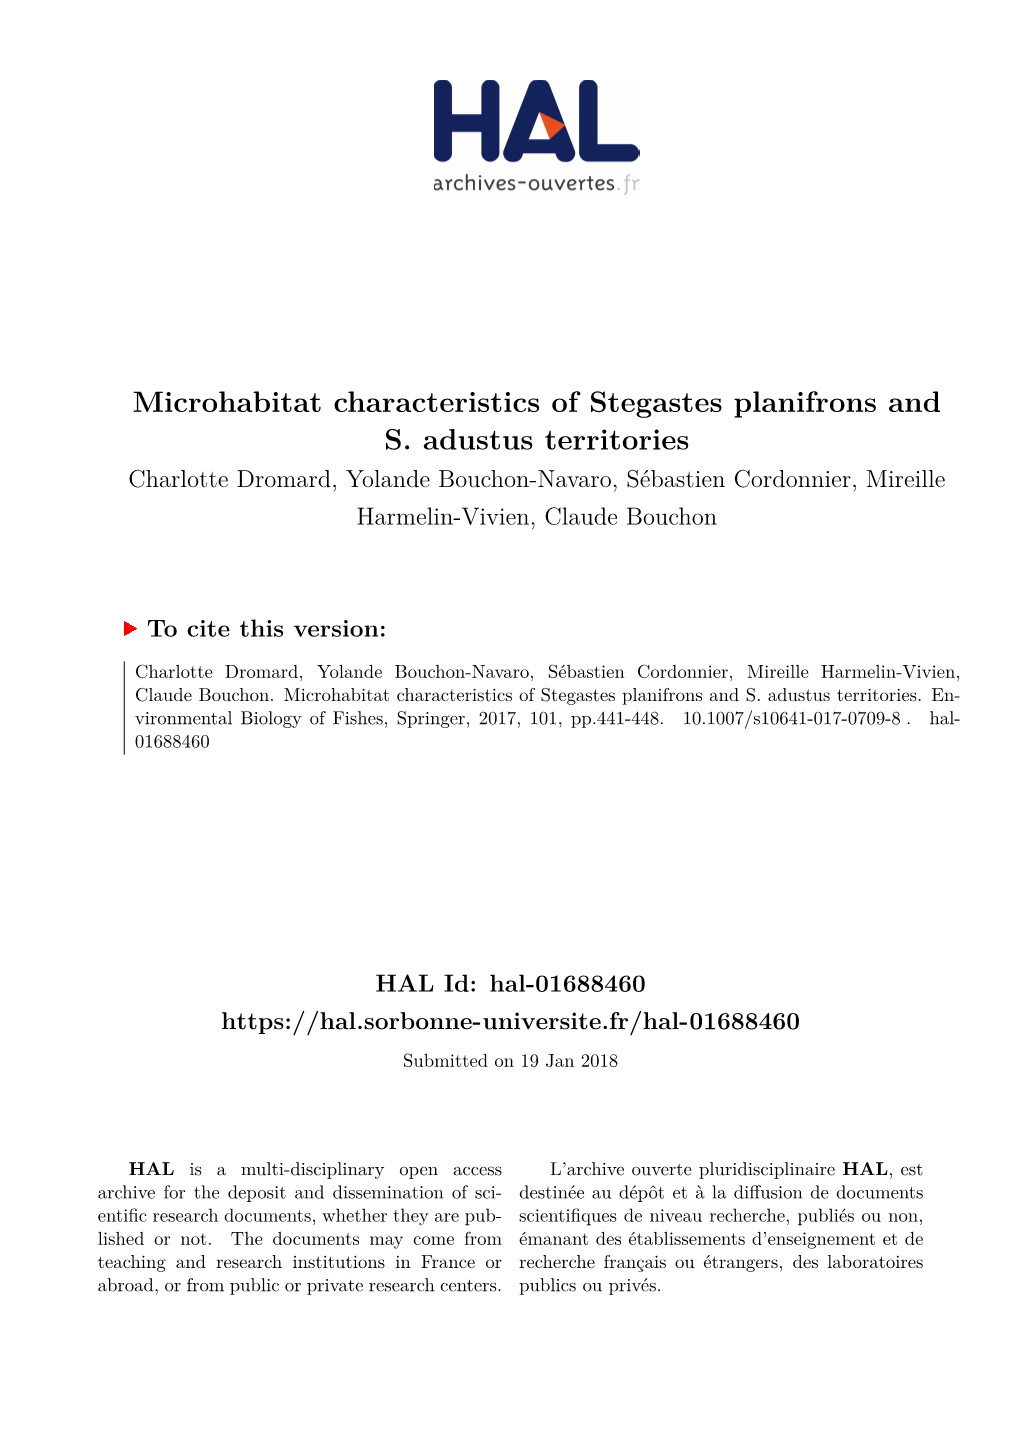 Microhabitat Characteristics of Stegastes Planifrons and S. Adustus